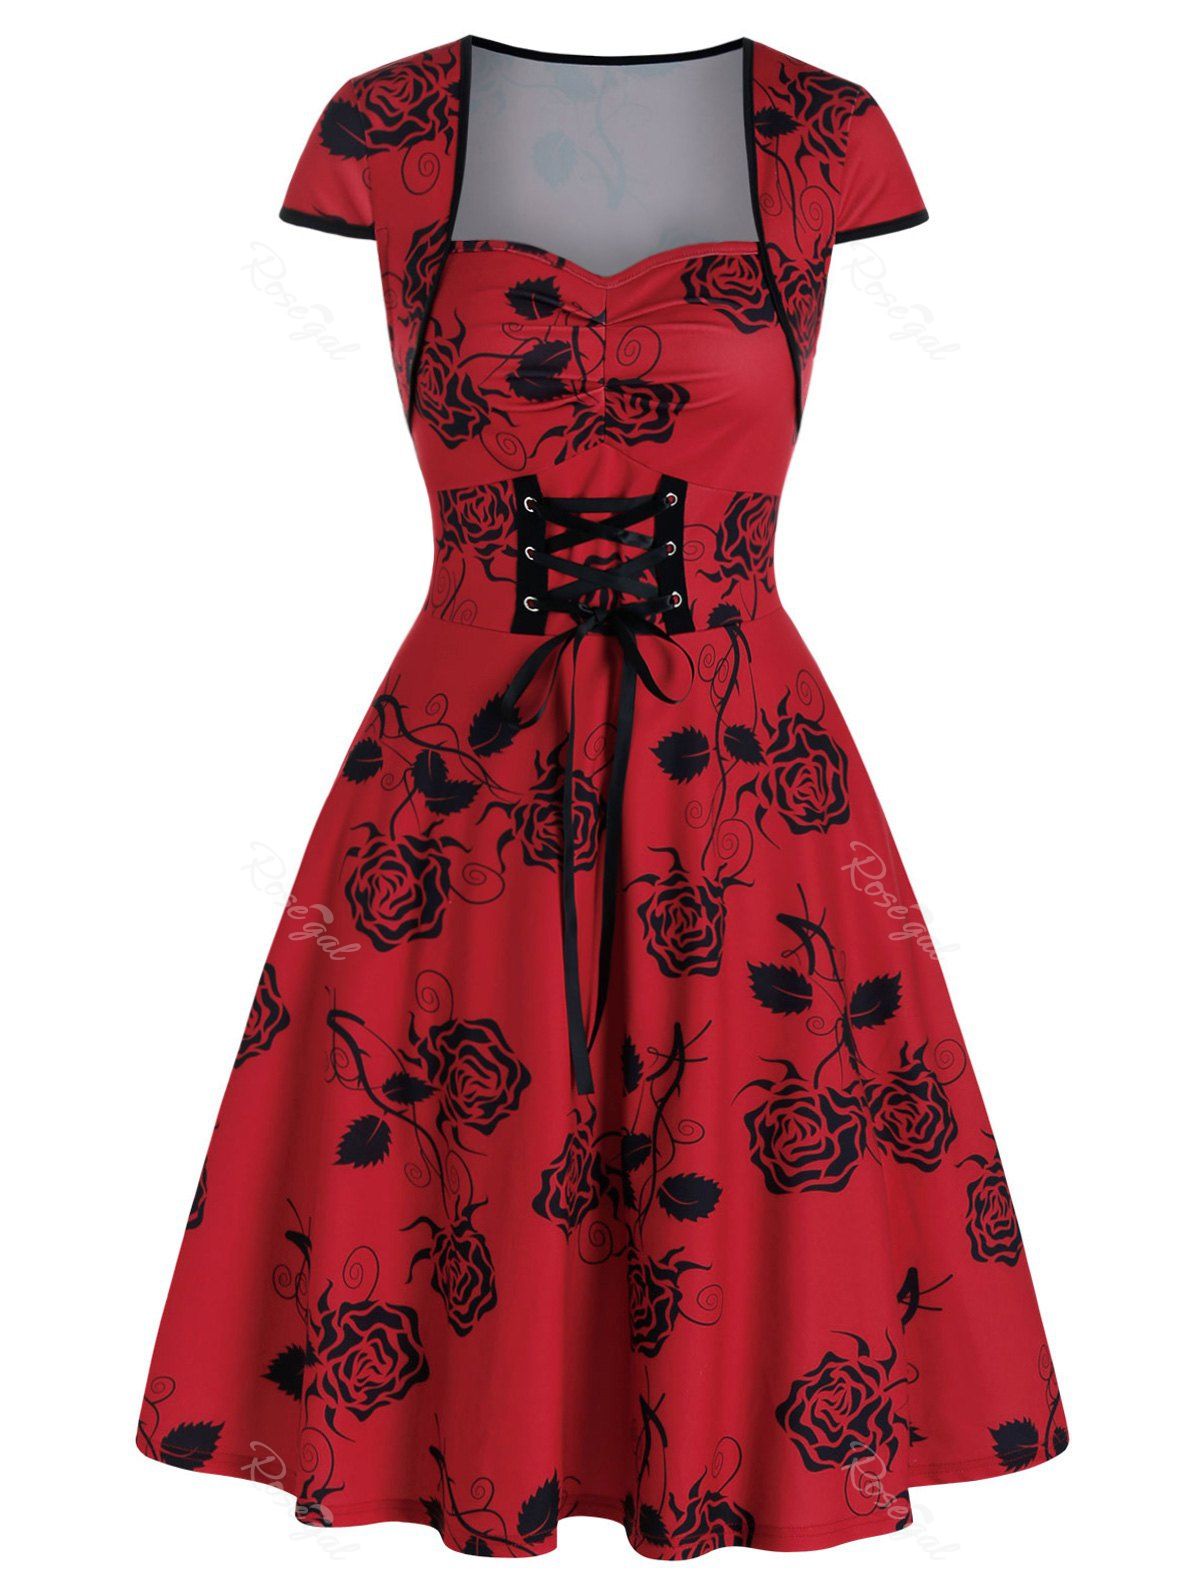 Discount Floral Print Lace Up Square Collar Mini Dress  